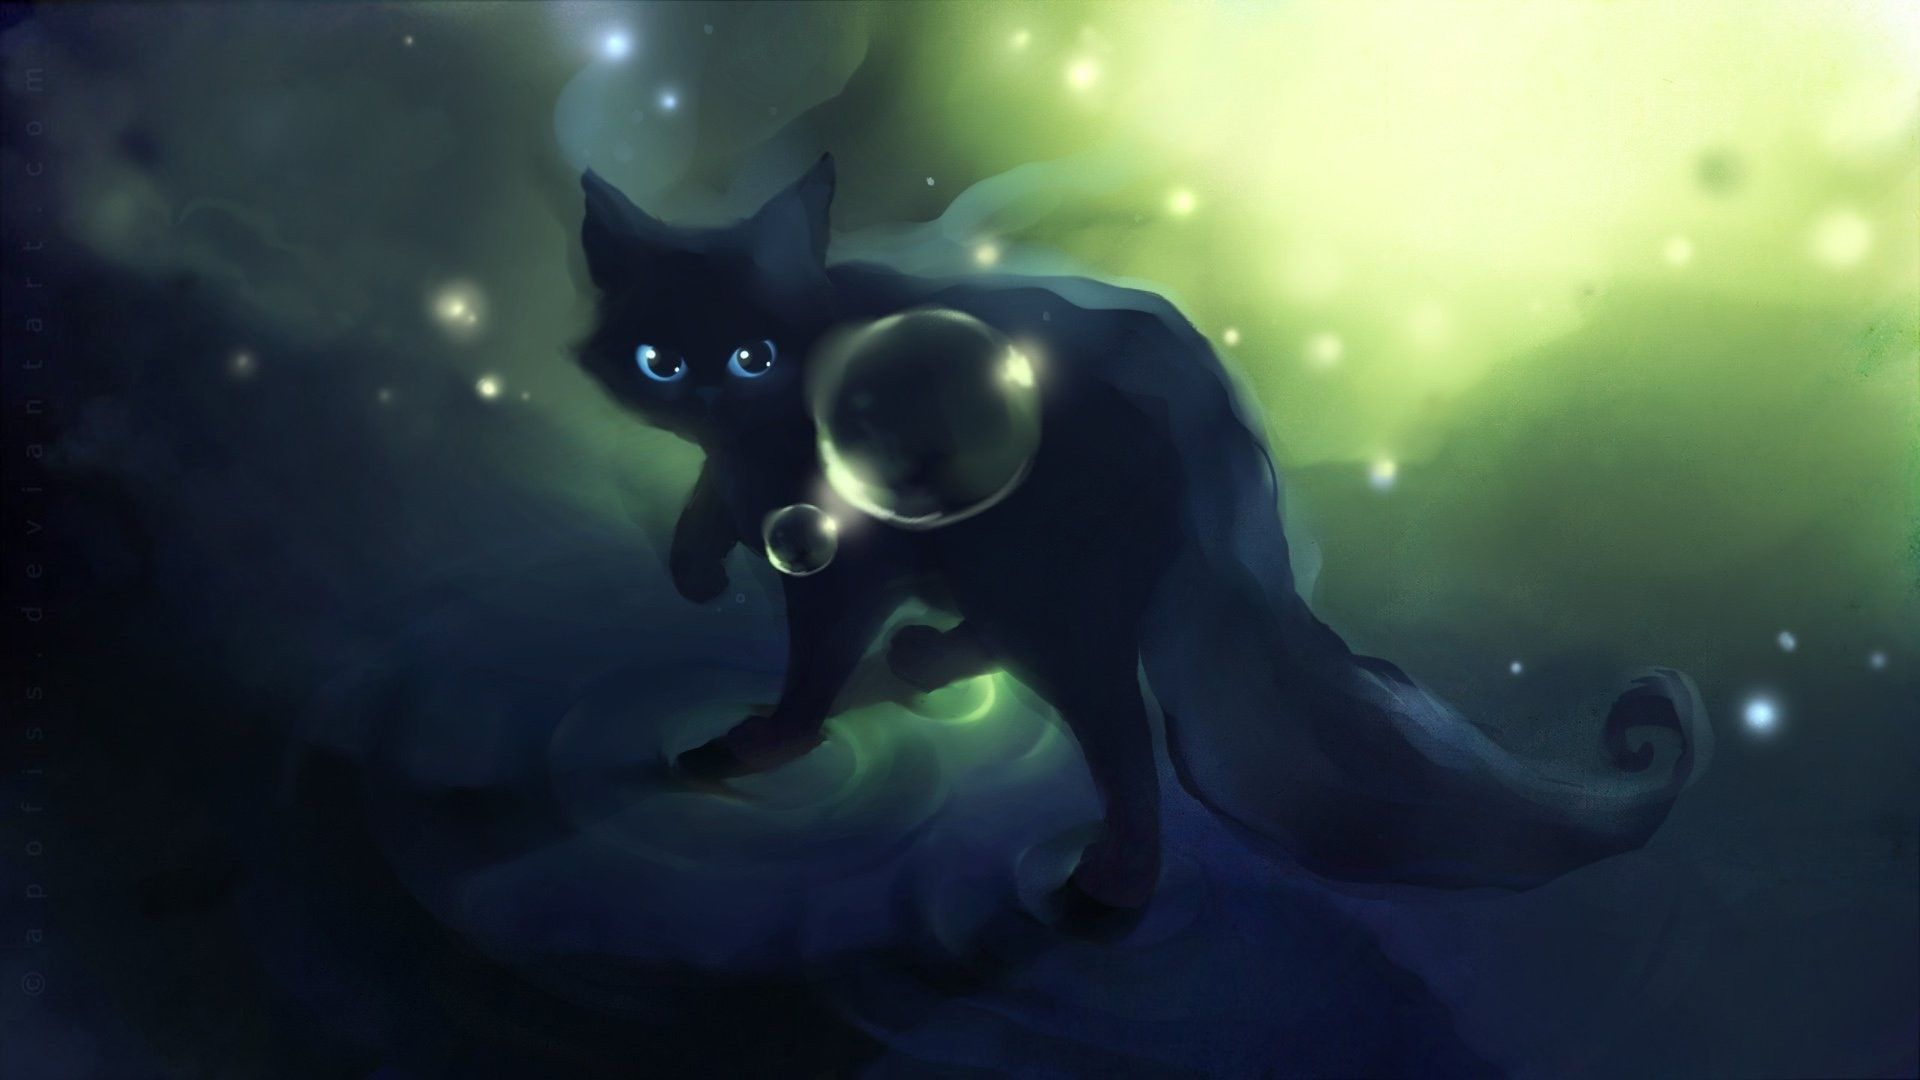 Cute Black Cat Anime Wallpaper Free Cute Black Cat Anime Background